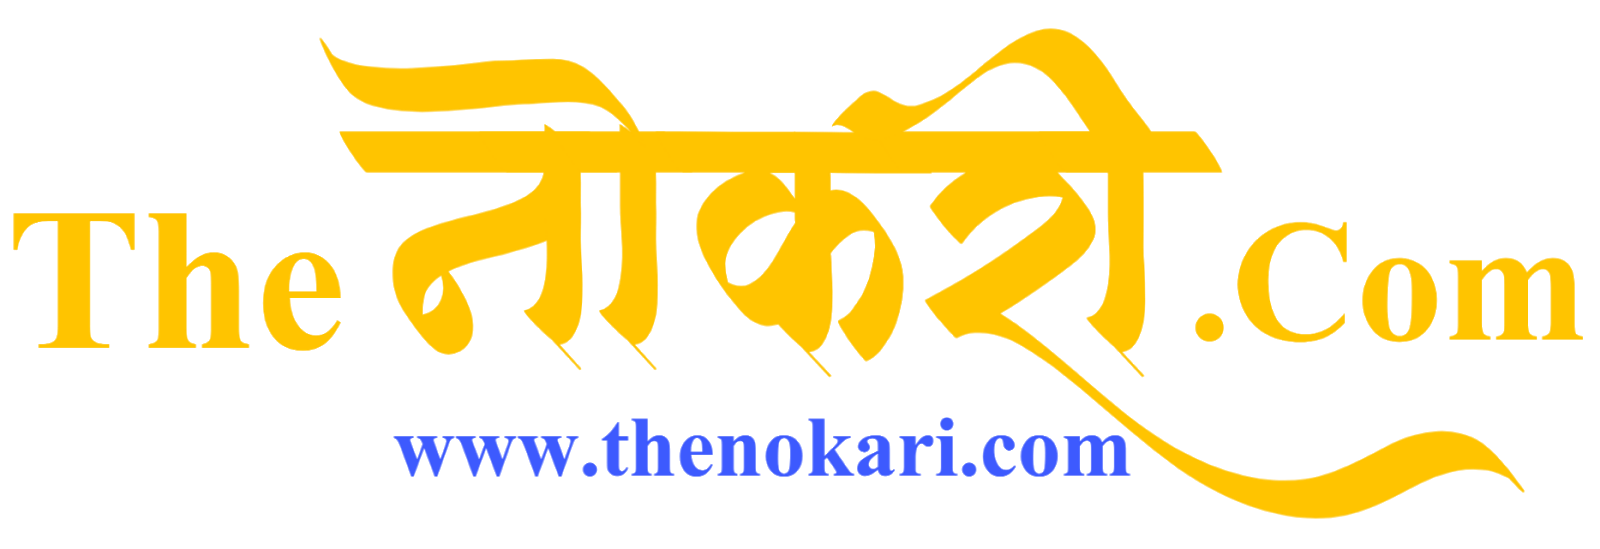 The Nokari